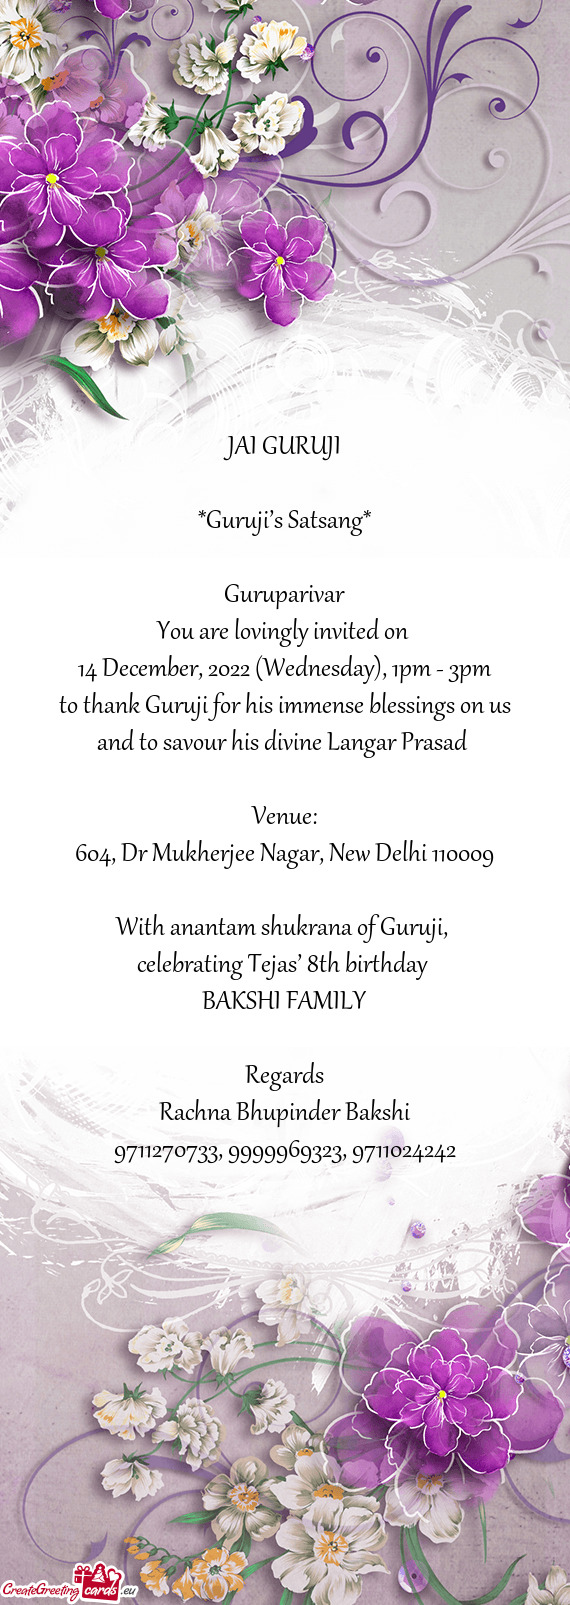 604, Dr Mukherjee Nagar, New Delhi 110009